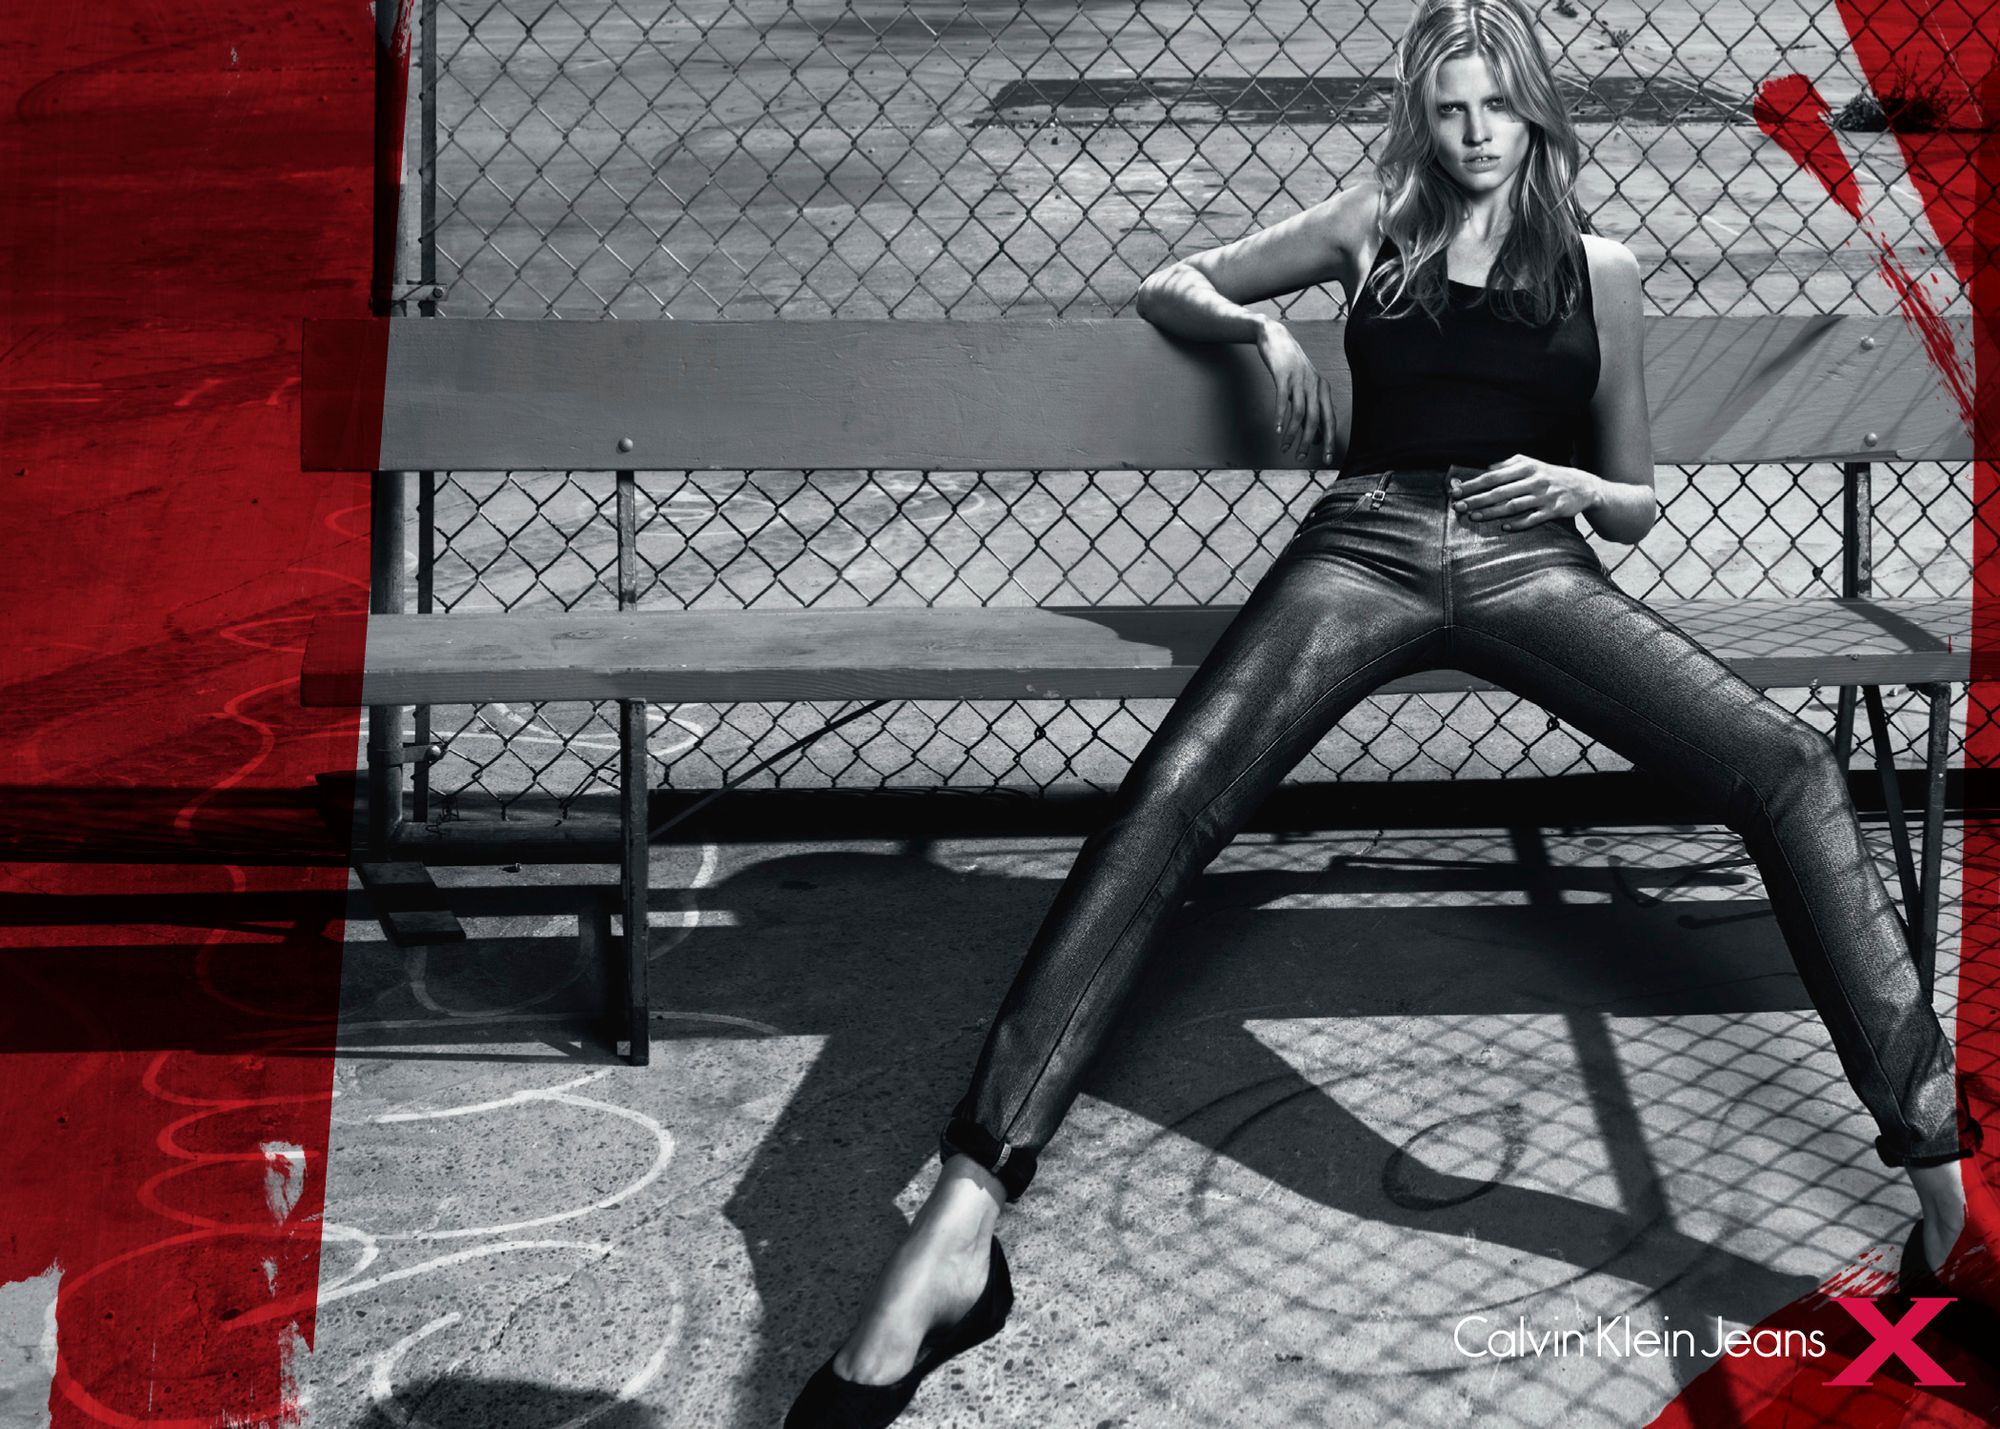 MissMalini Contest: Who Wants to Win a Pair of Calvin Klein Jeans?! |  MissMalini